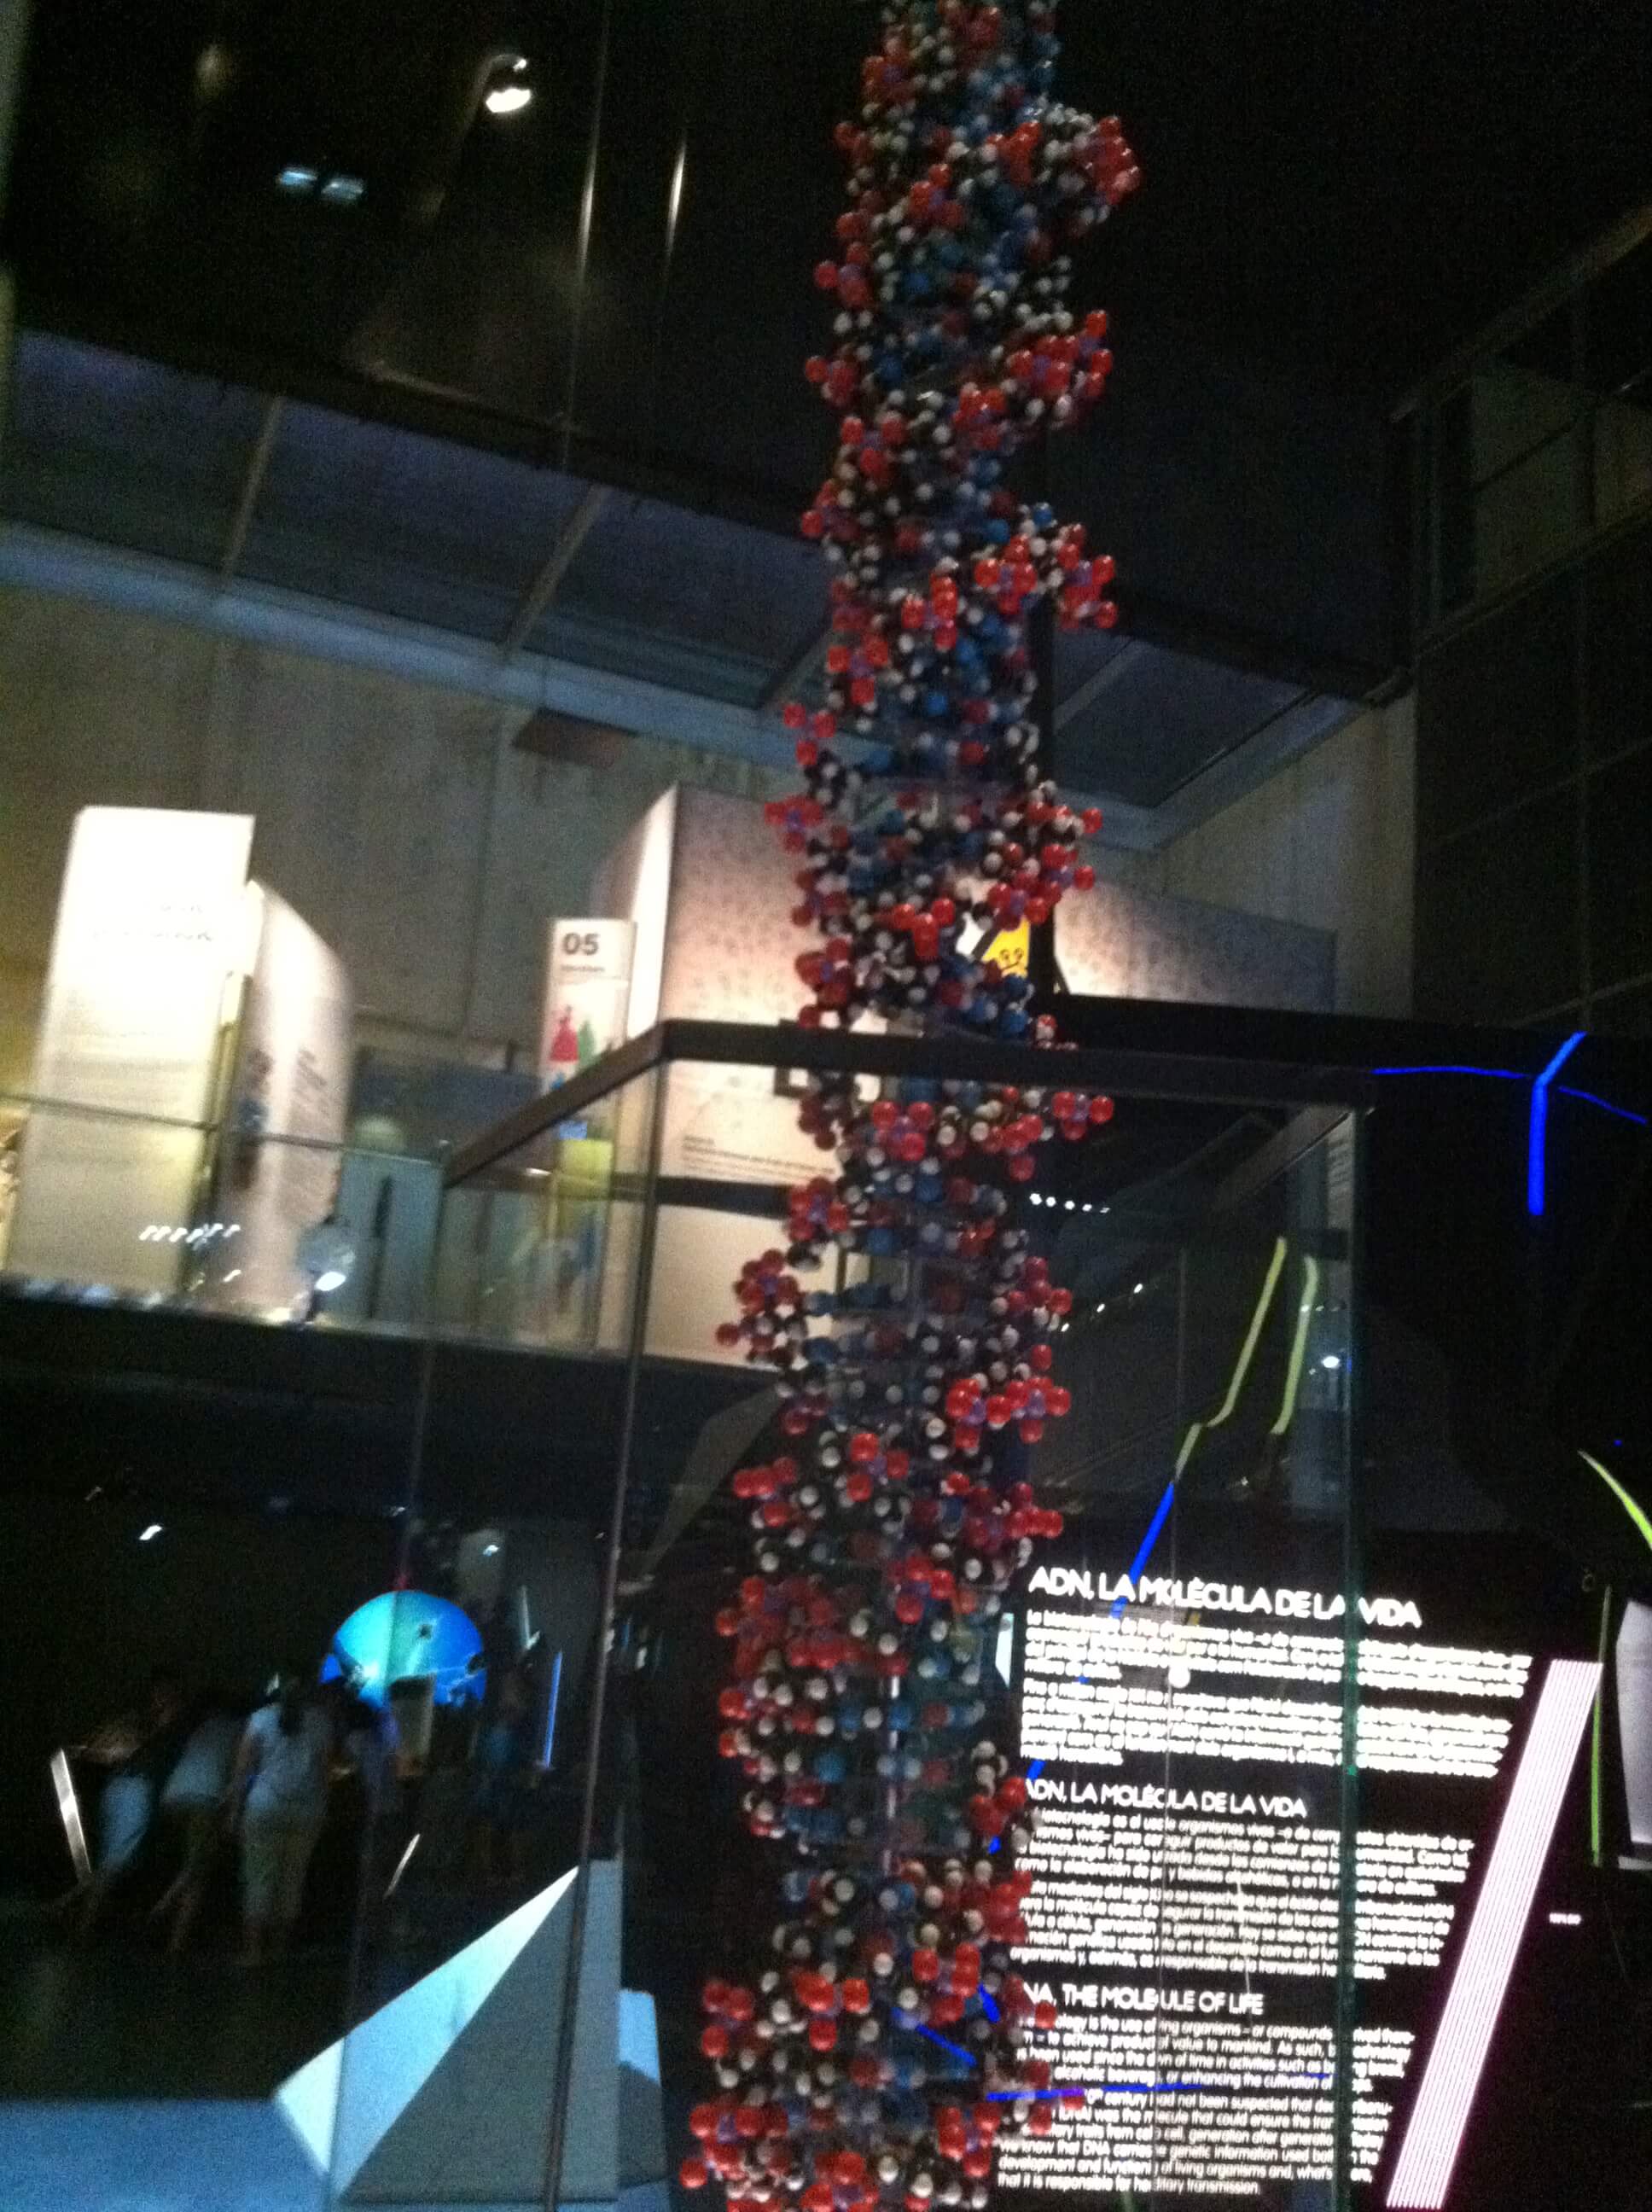 A model of a DNA molecule in the Science Museum in Barcelona. Photo: Avi Blizovsky